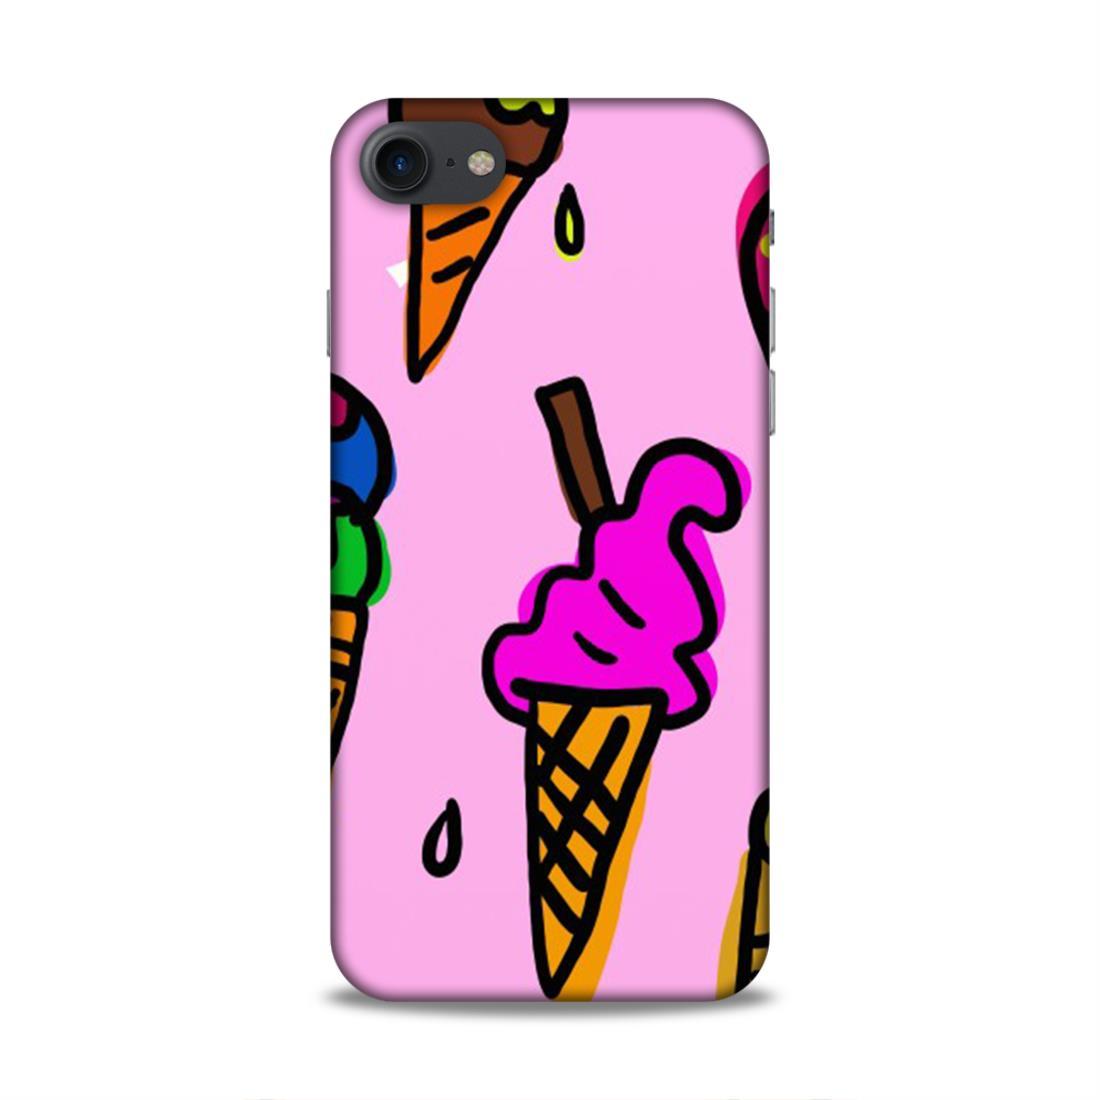 Icecream Pink iPhone 8 Phone Cover